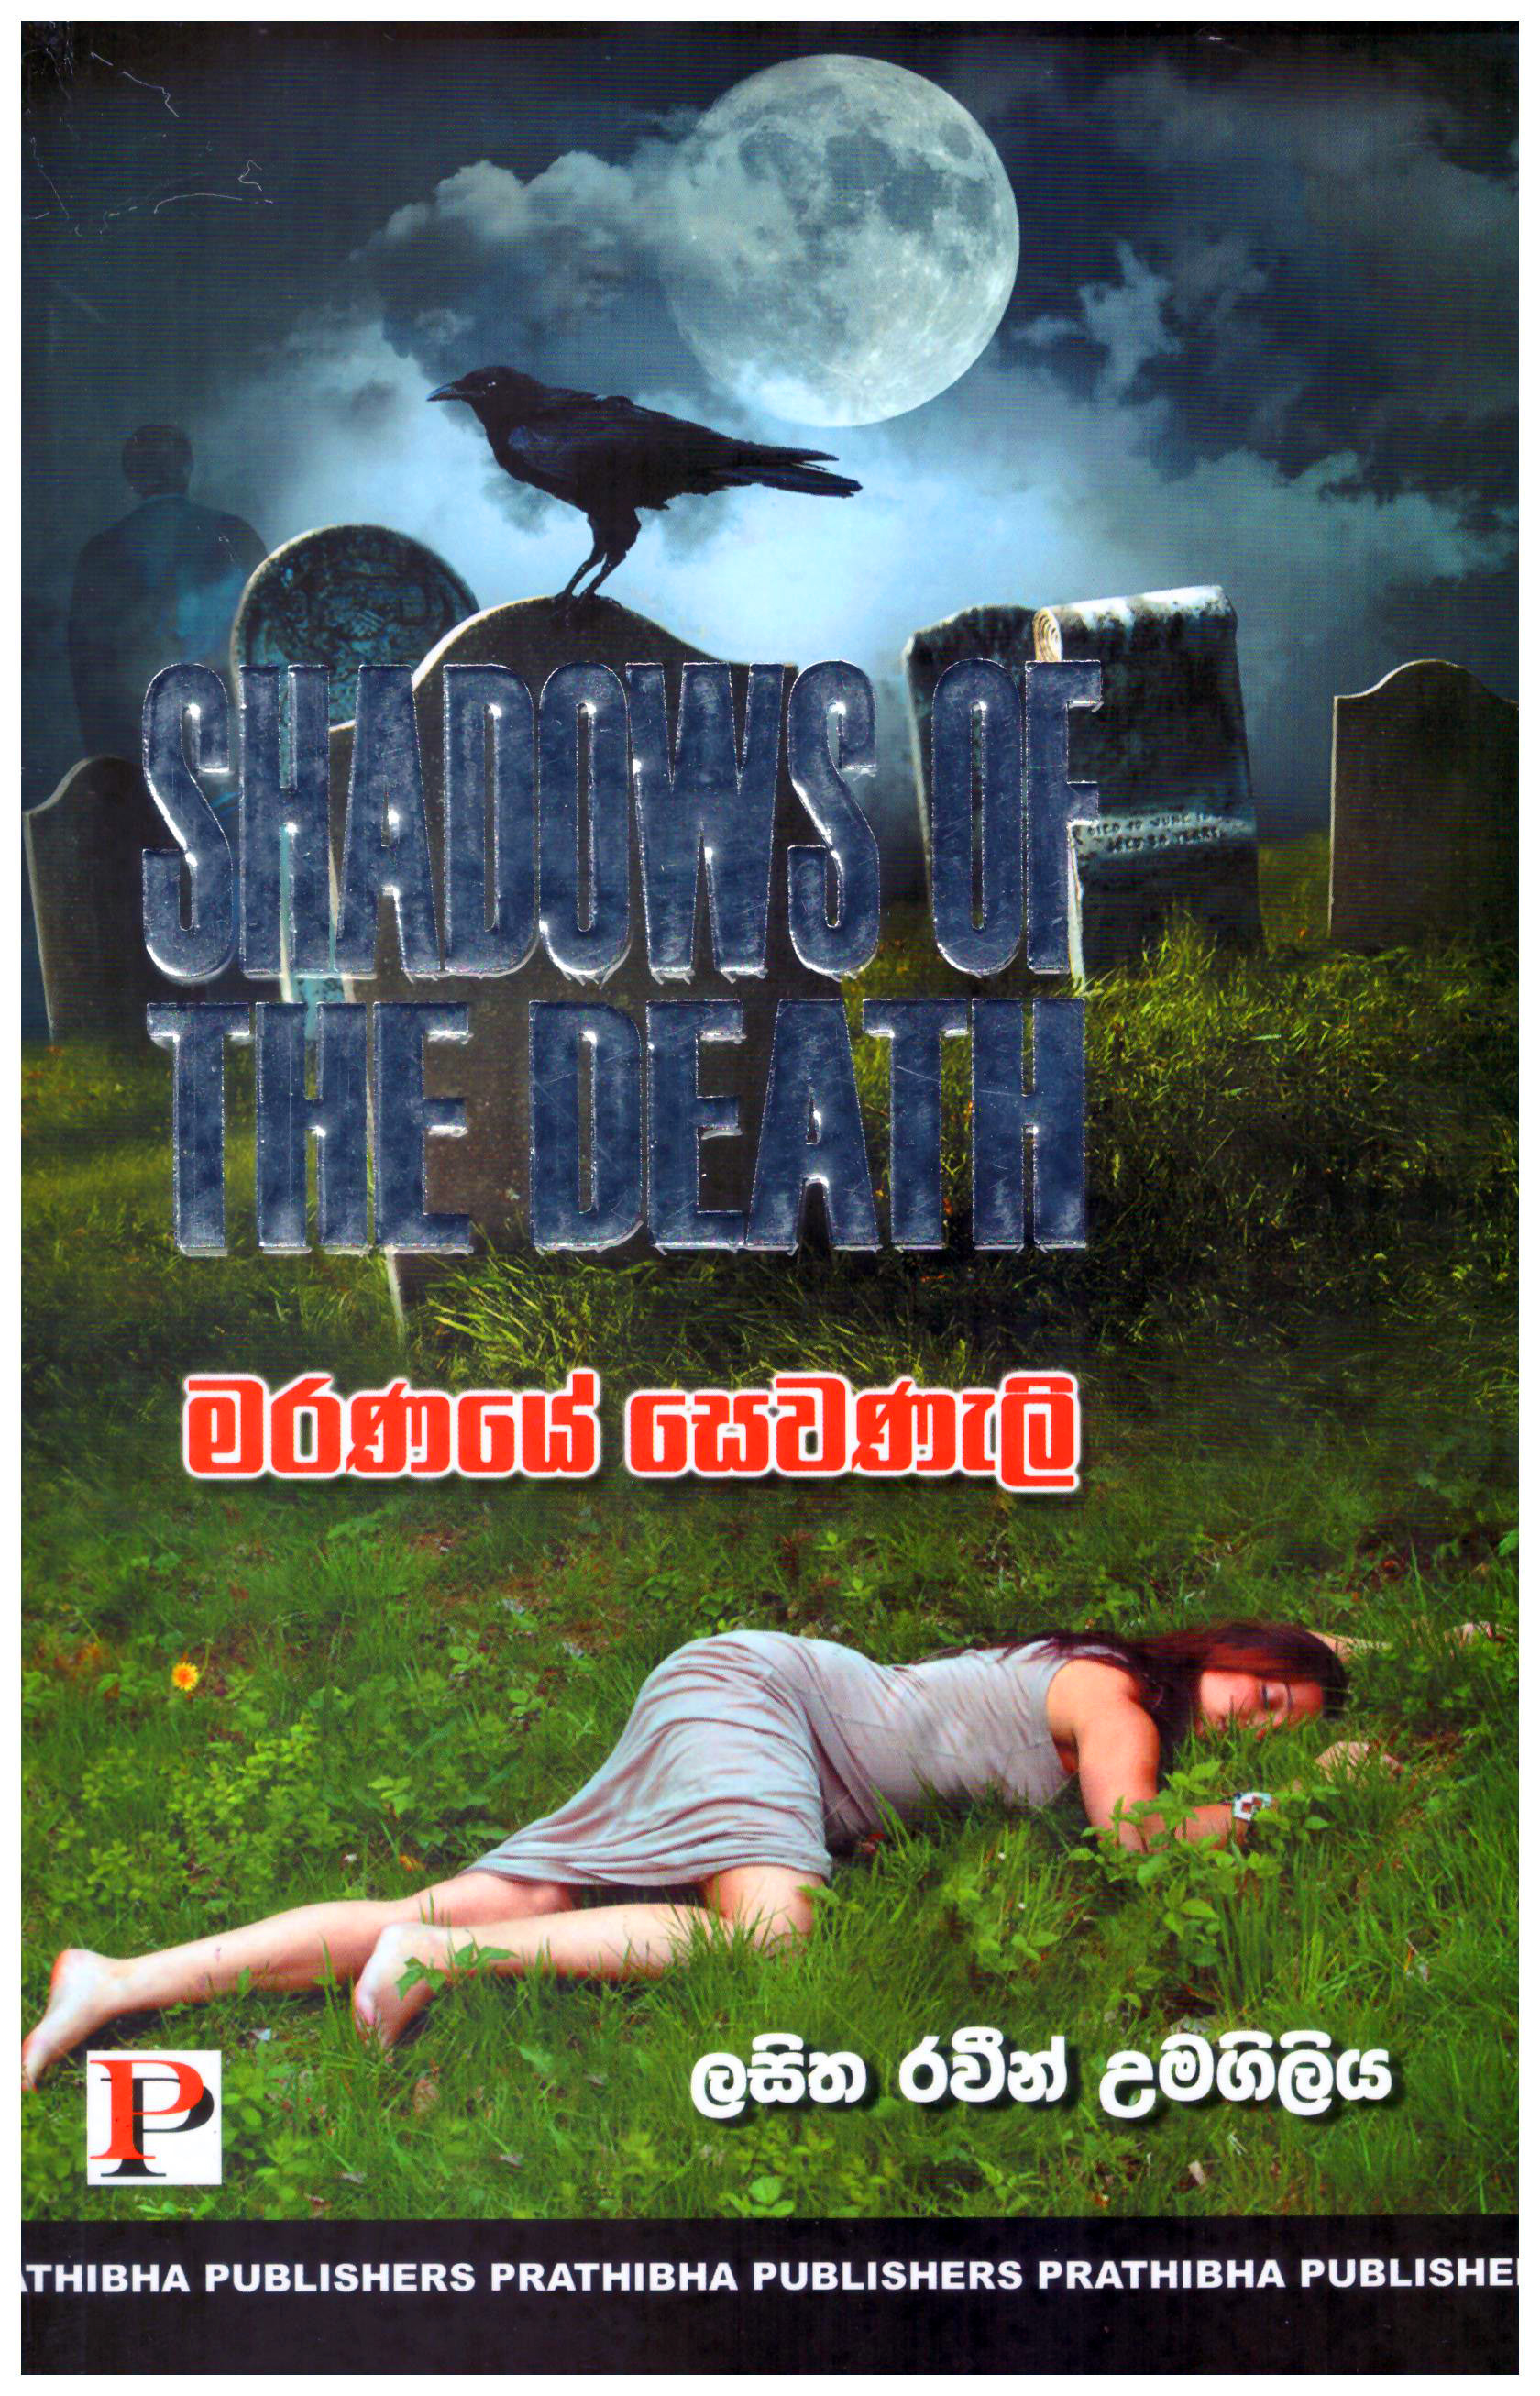 Maranaye Sewaneli Saha Thawath Athbutha Katha (Shadows of The Death)